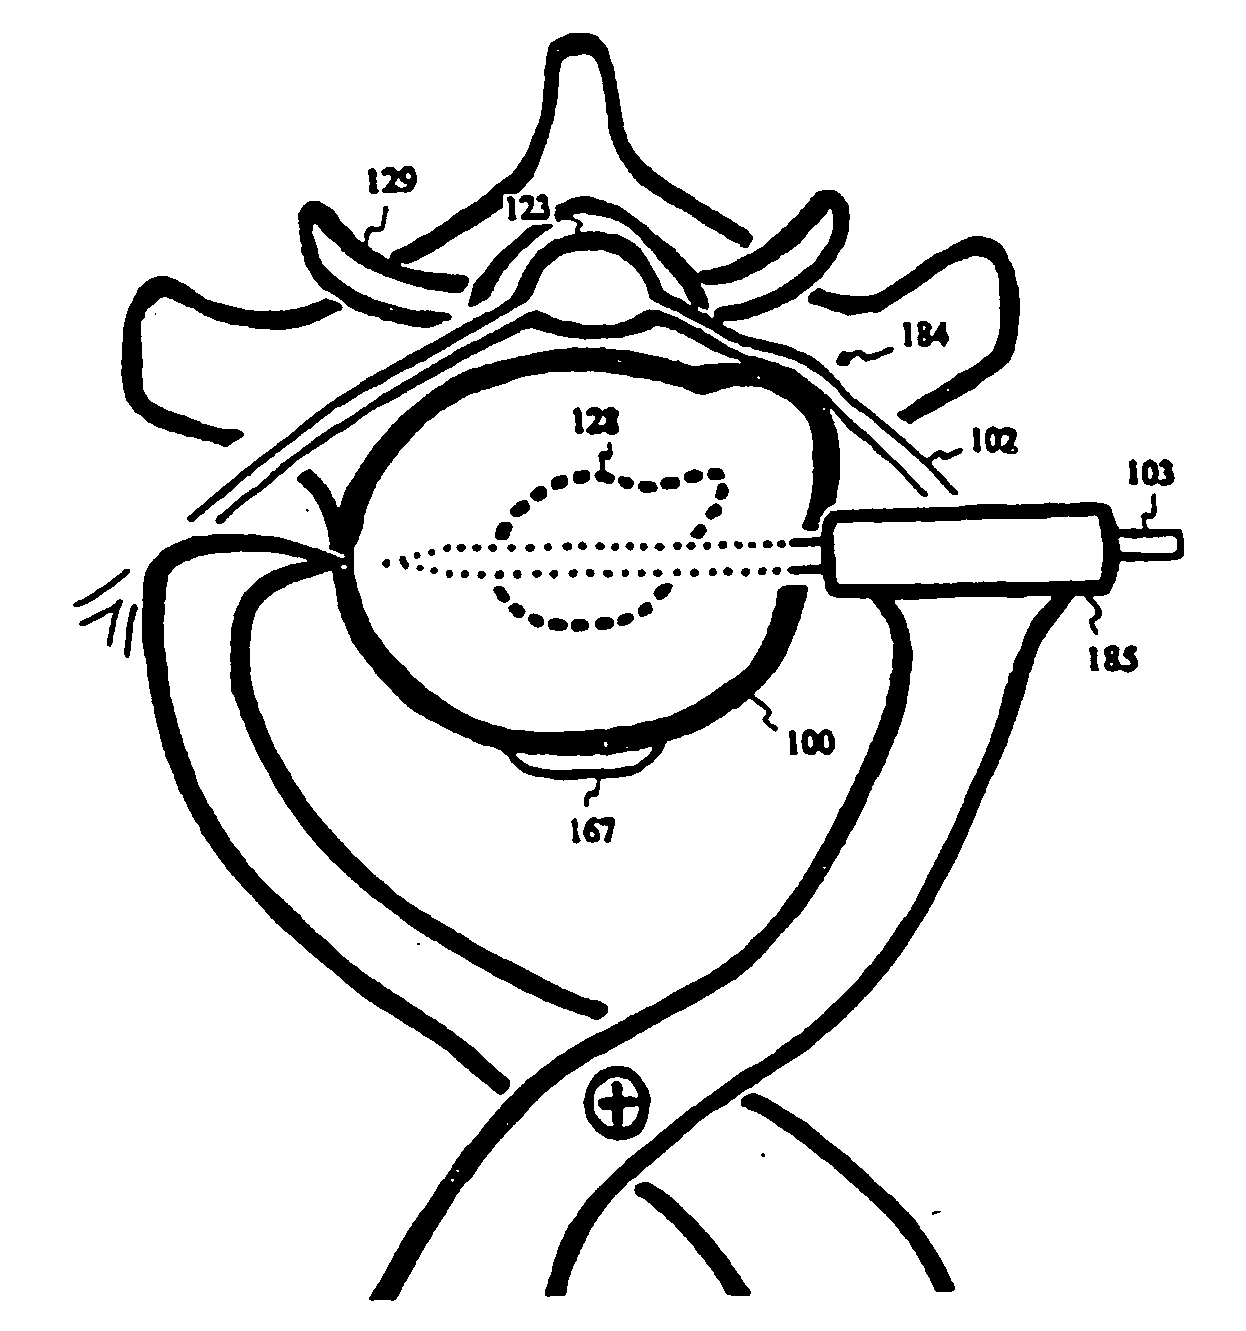 Intervertebral disc inserting device